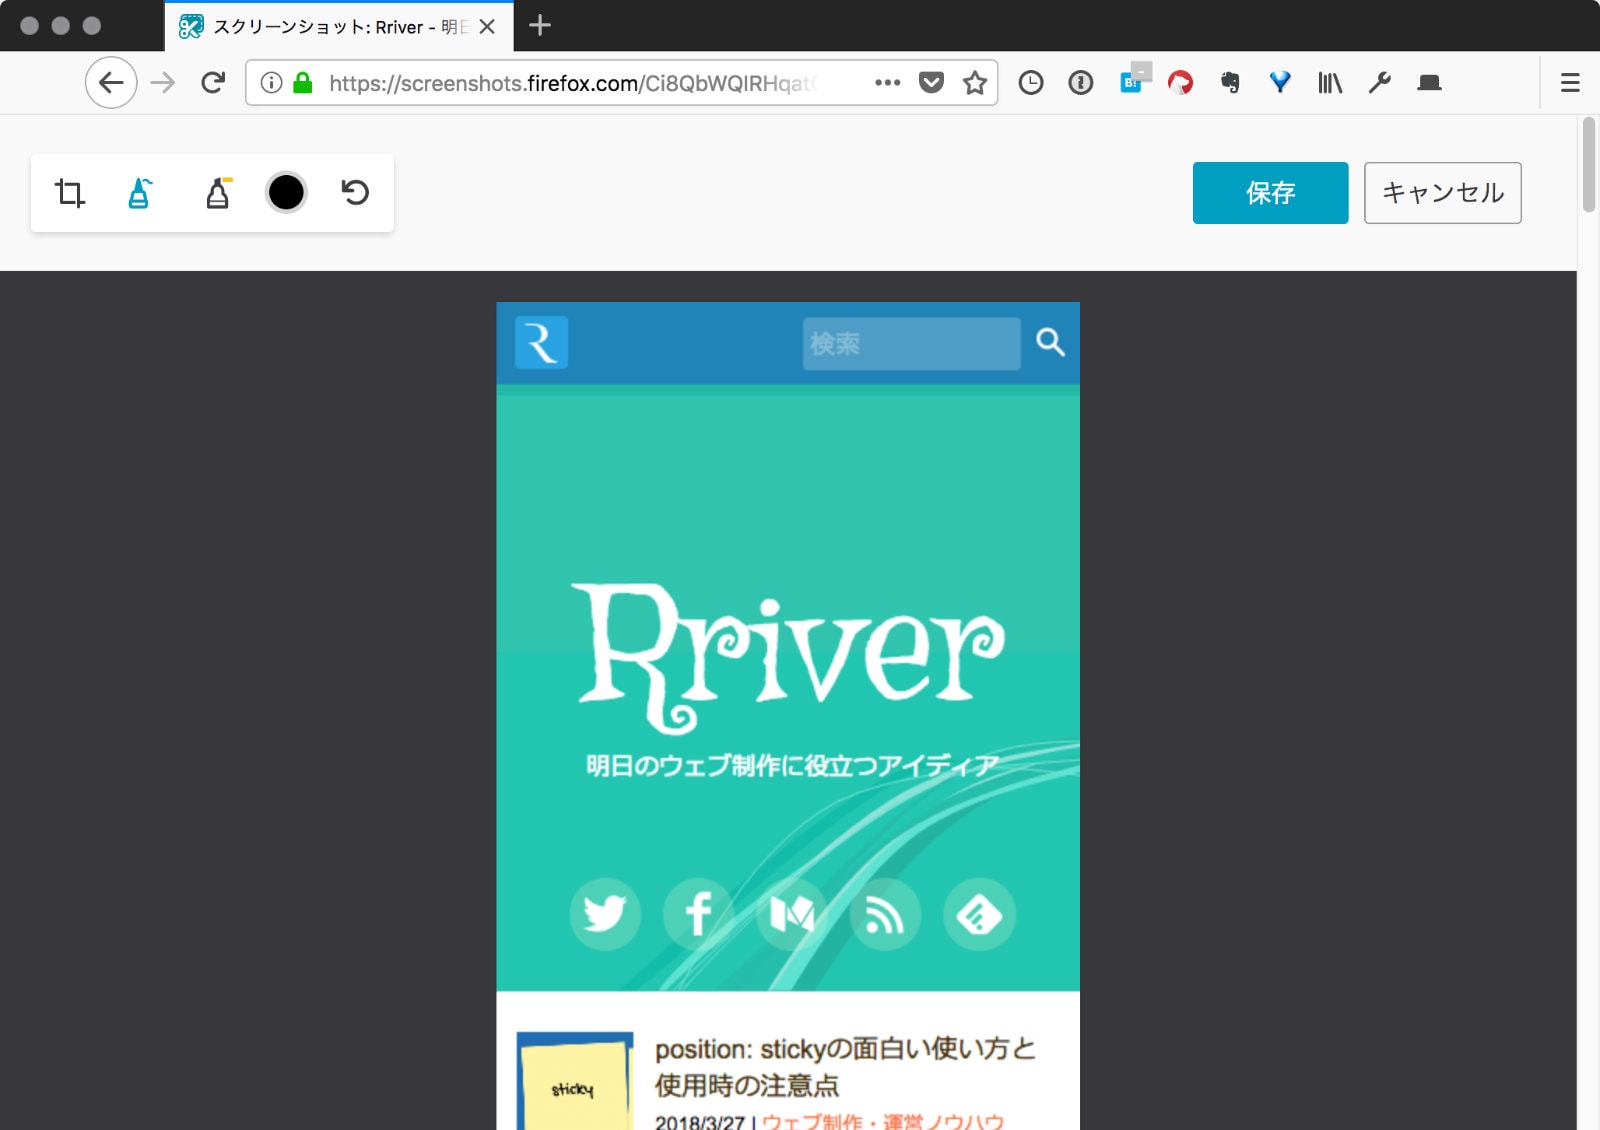 Firefox Screenshotsの編集画面。ペン・ツールやクロップ・ツールが使える